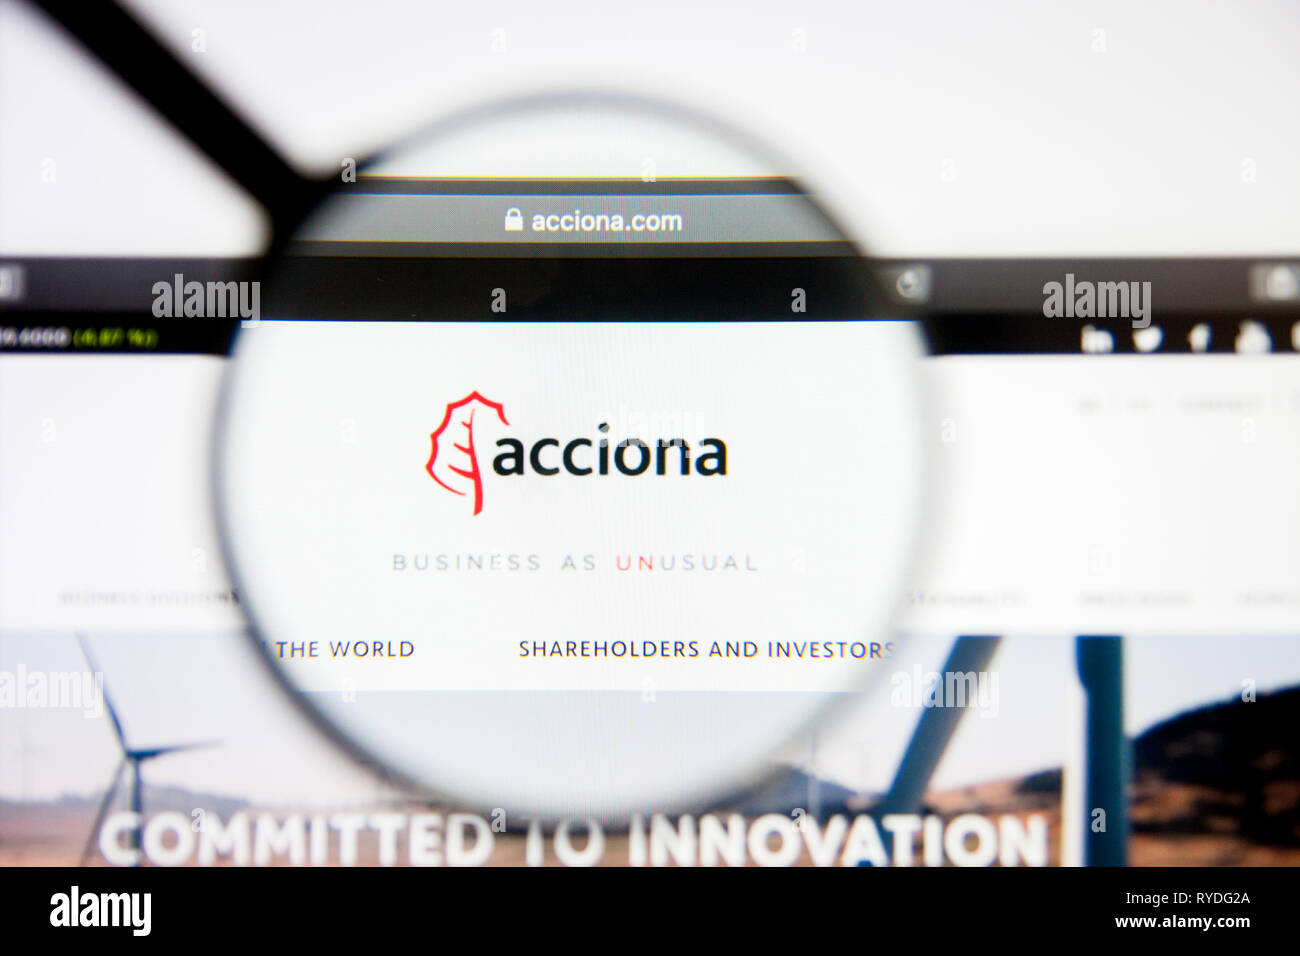 Los Angeles, Kalifornien, USA - 5. März 2019: Acciona Homepage. Acciona Logo sichtbar auf dem Display, Illustrative Editorial Stockfoto